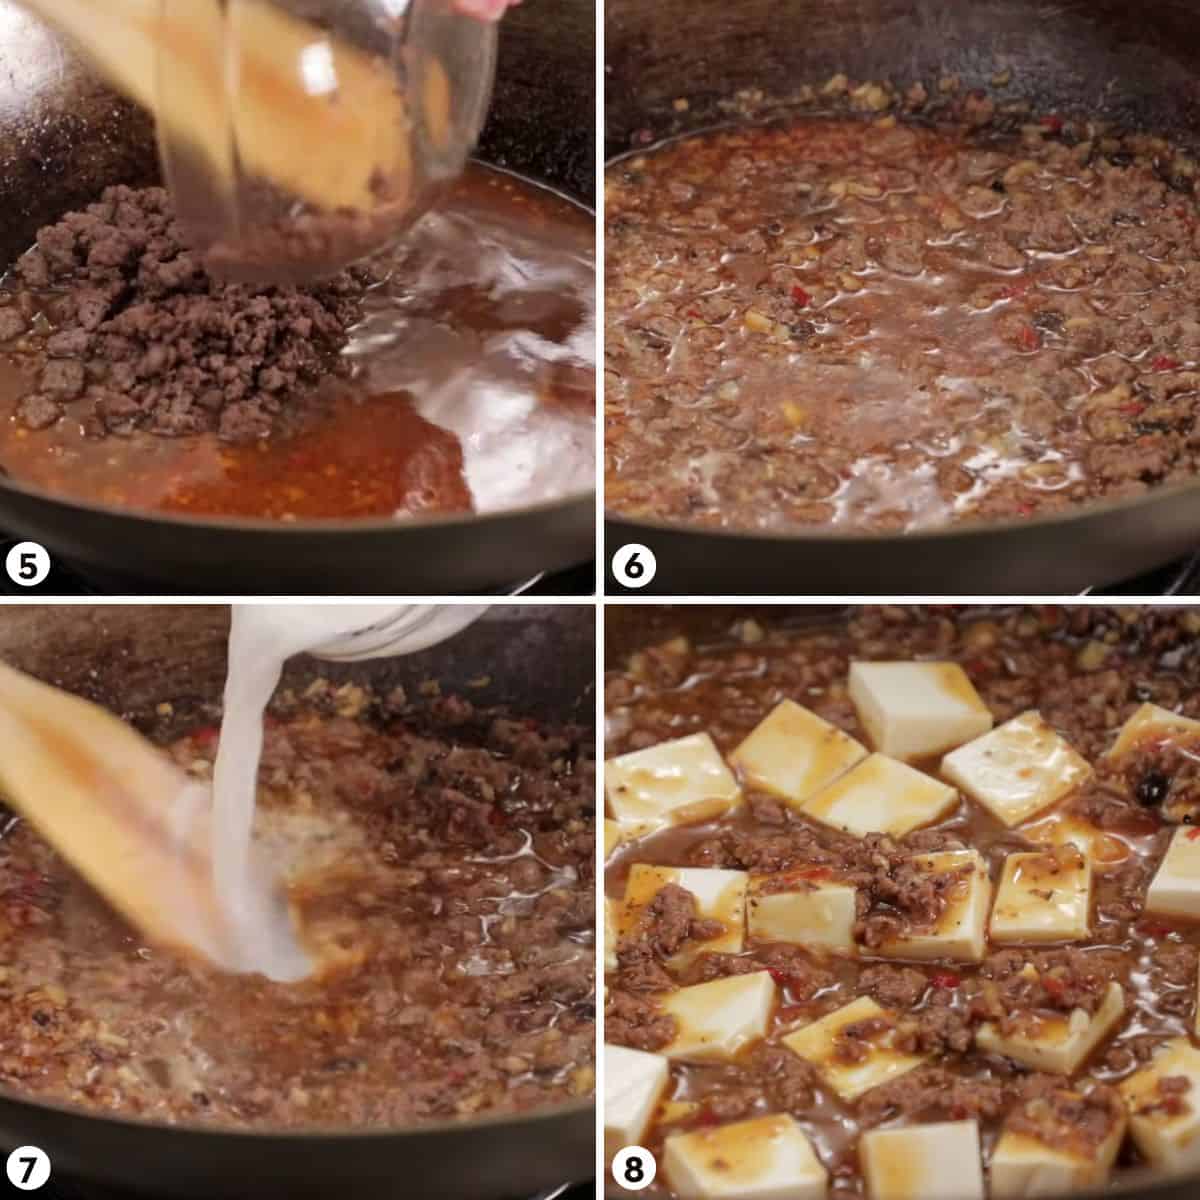 Process shots for making mapo tofu, steps 1-4